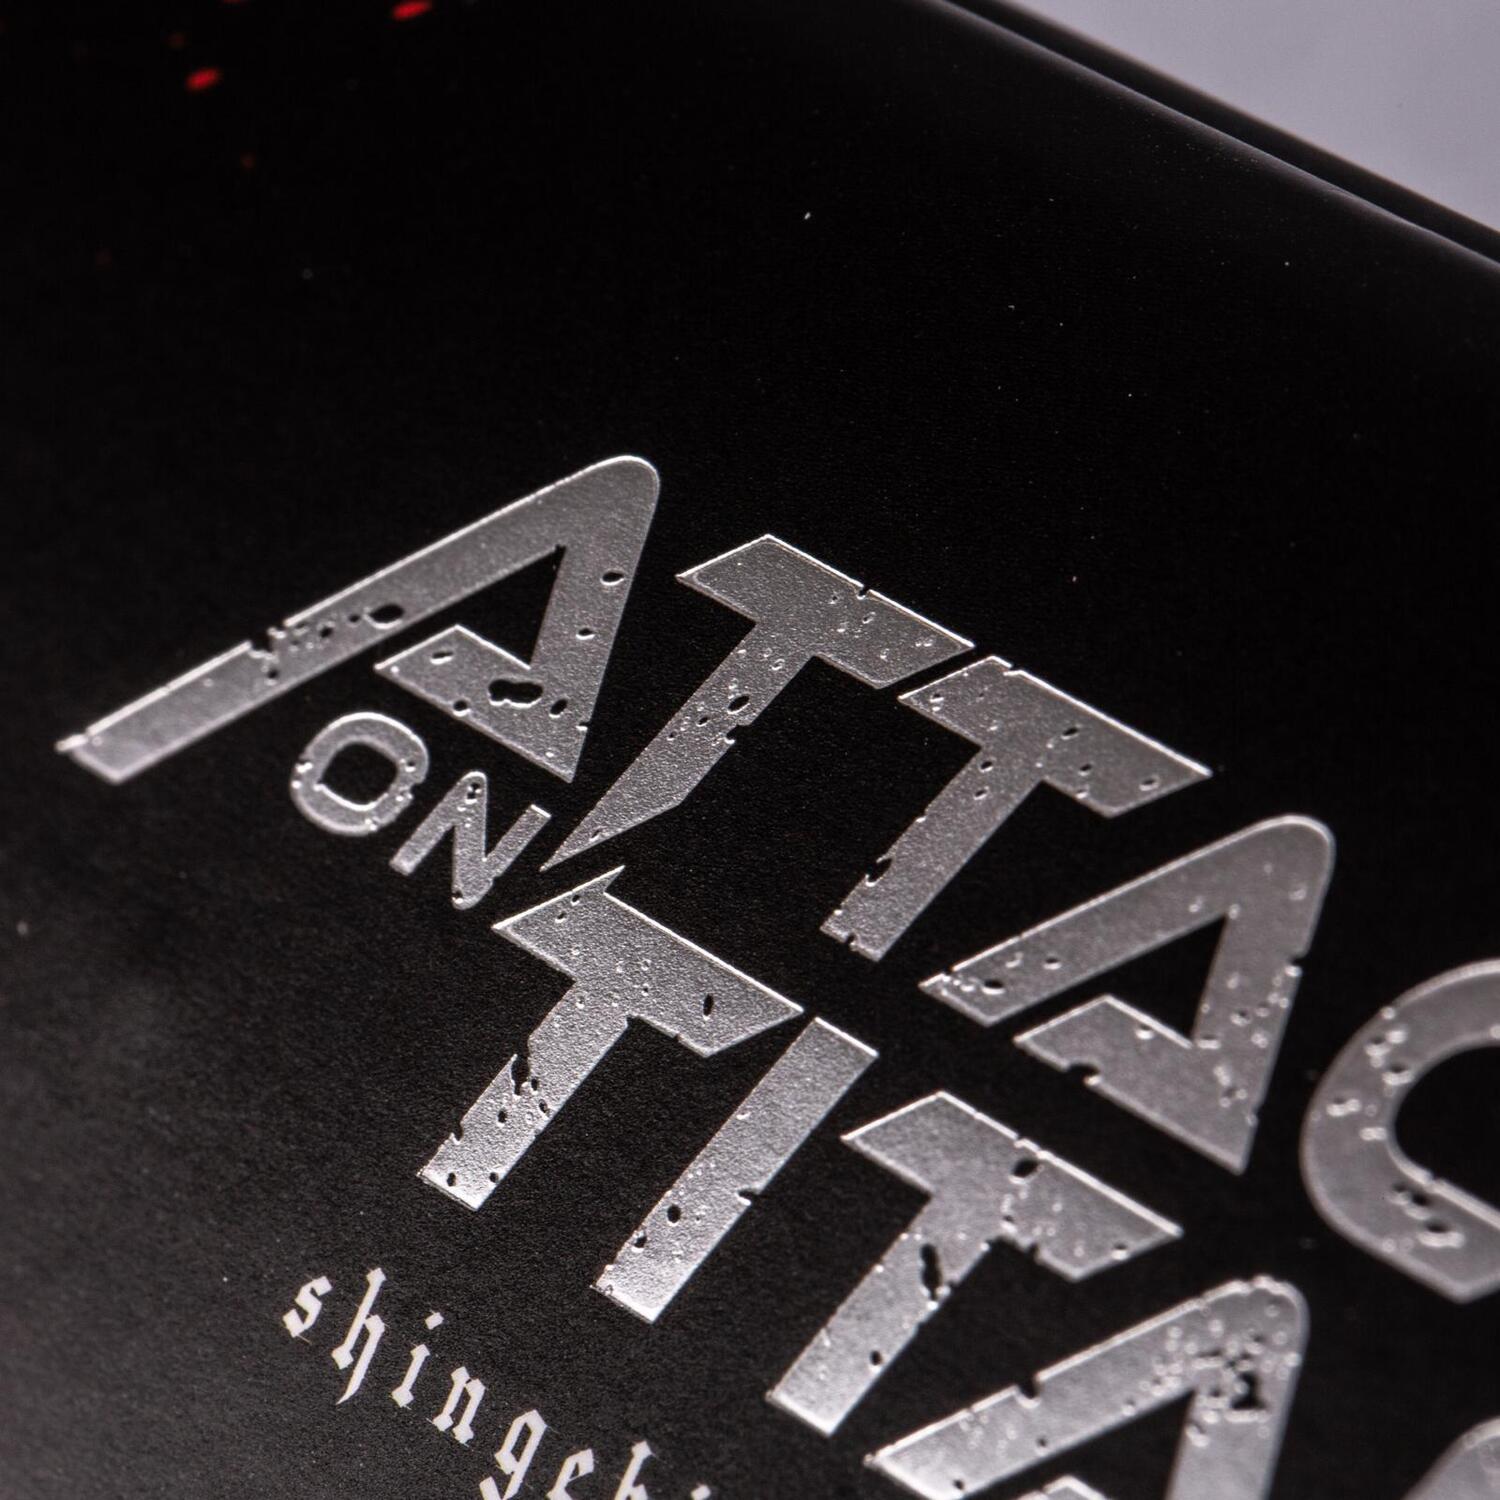 Bild: 9783551741097 | Attack on Titan Deluxe 7 | Hajime Isayama | Buch | 568 S. | Deutsch